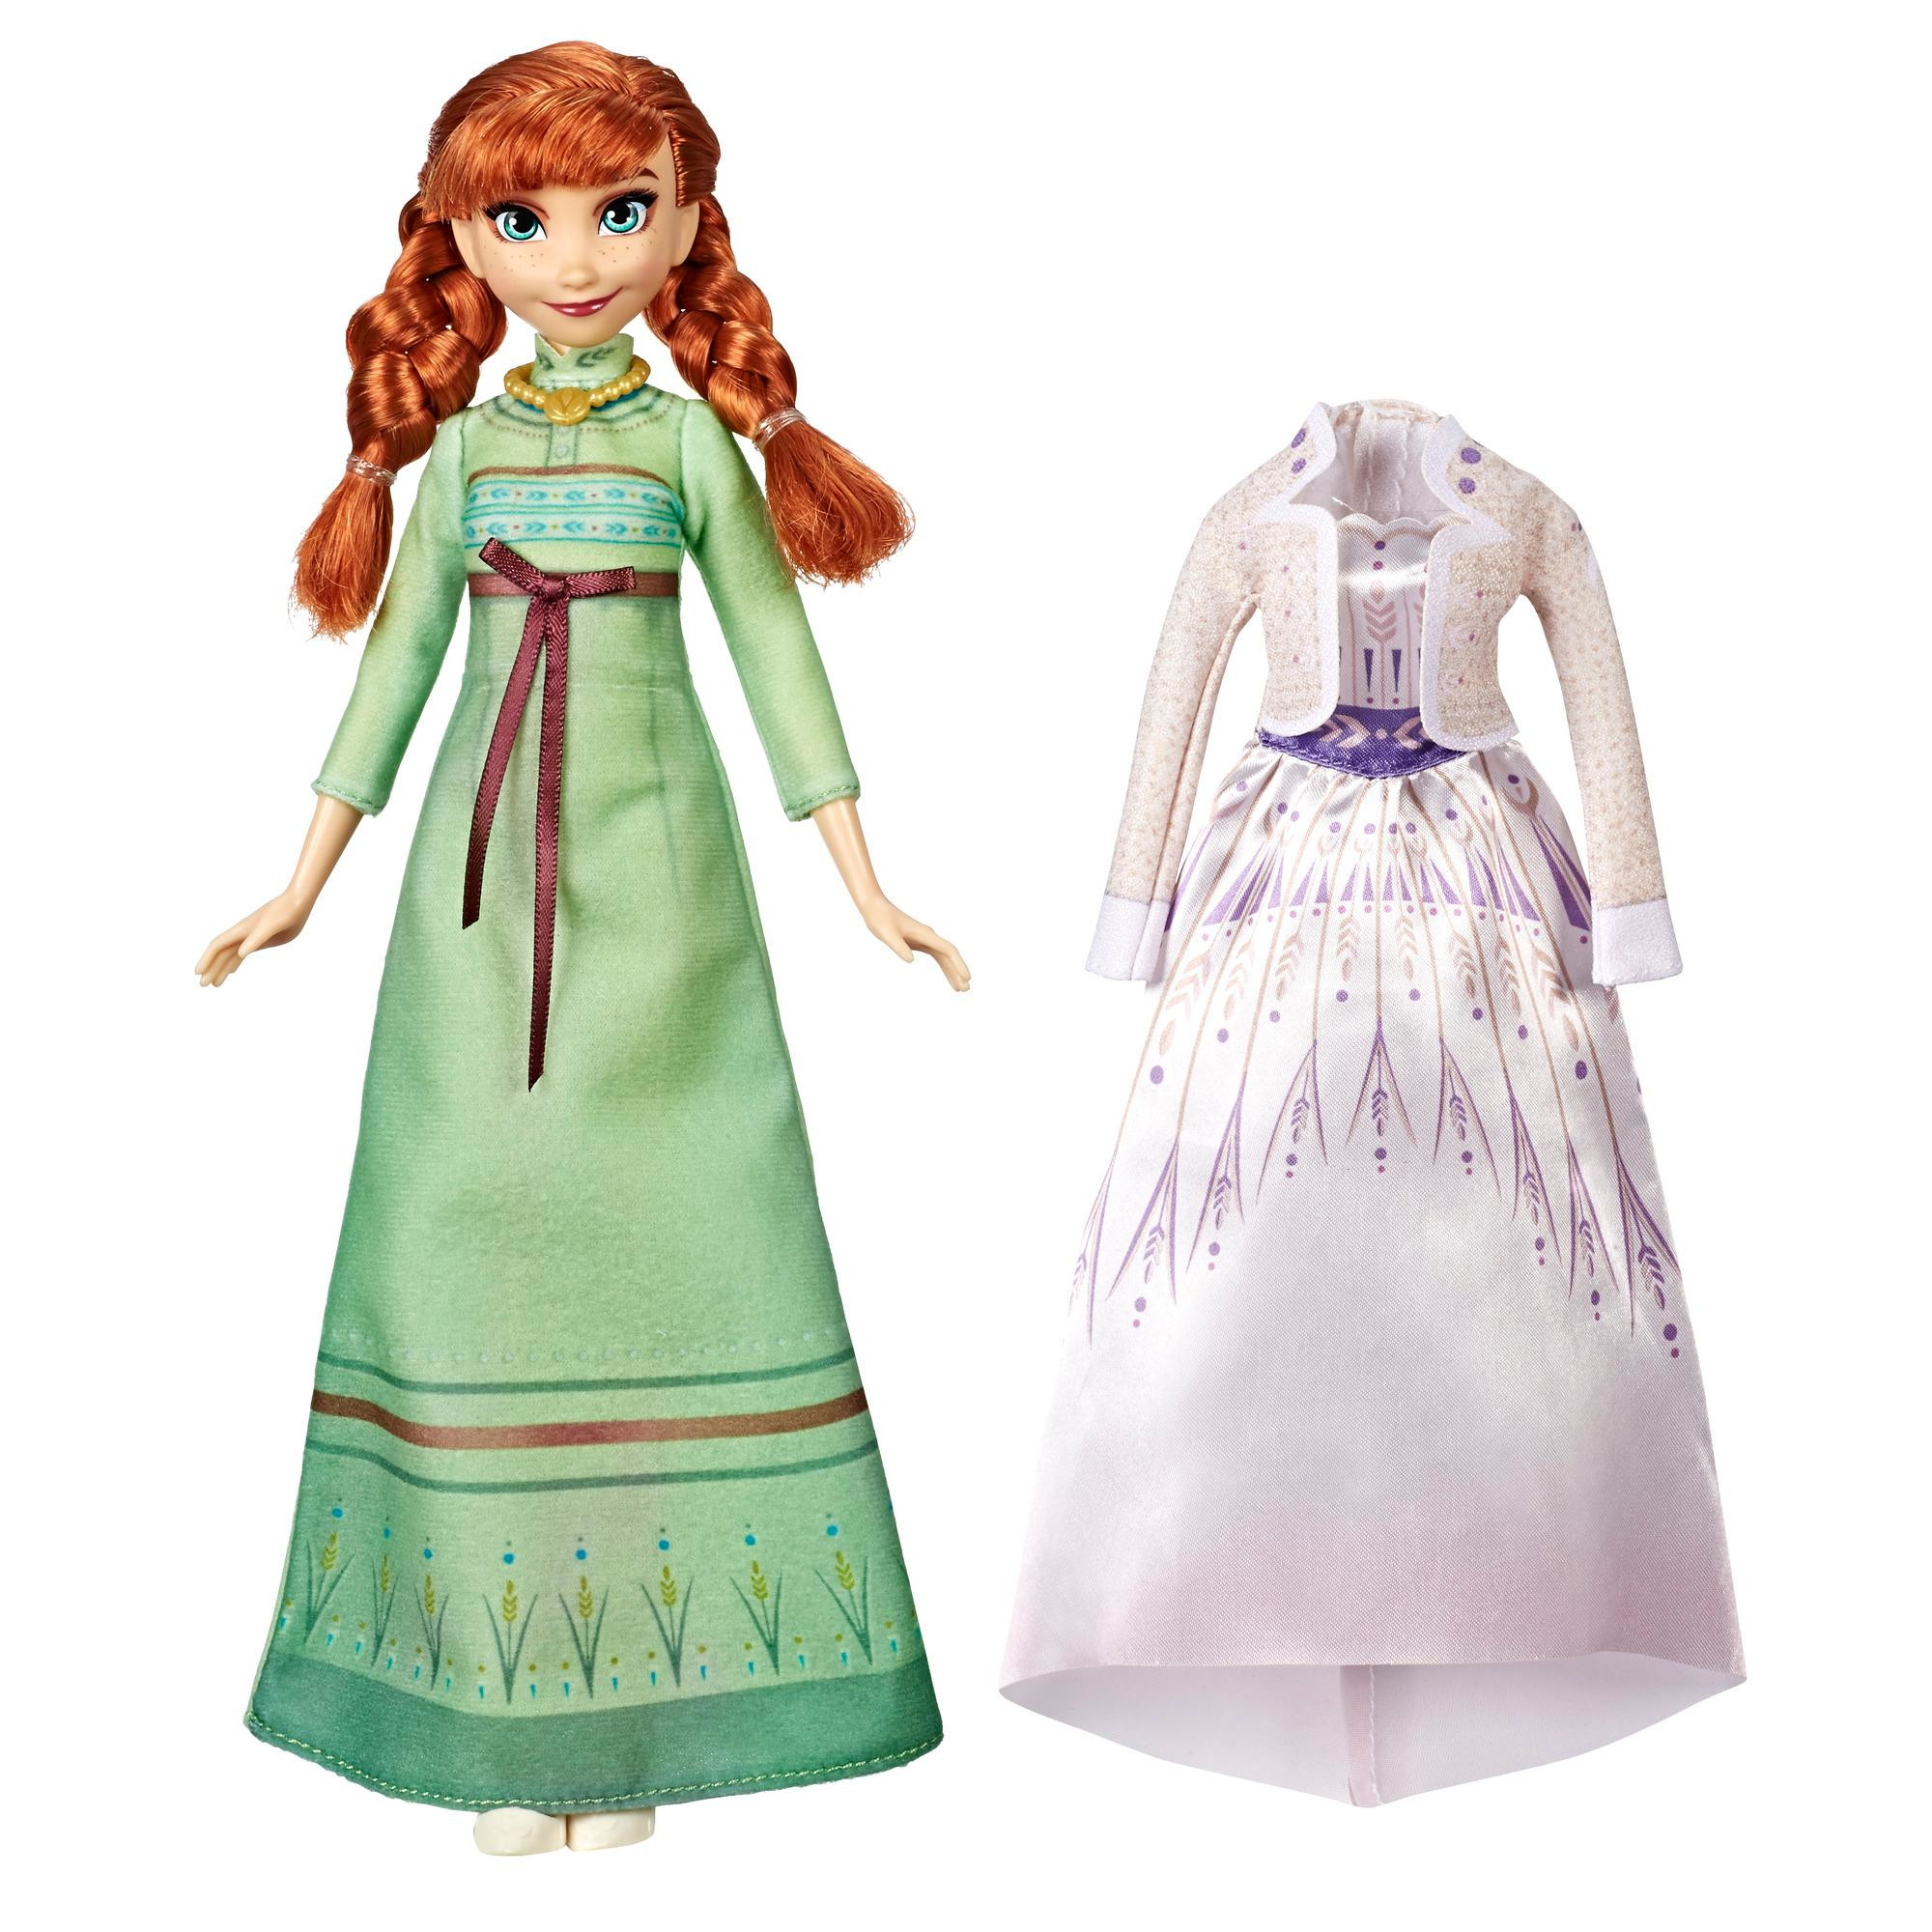 Hasbro Disney Frozen 2 Fashion + Extra vestido Anna, multicolor, E6908ES0 , color modelo surtido